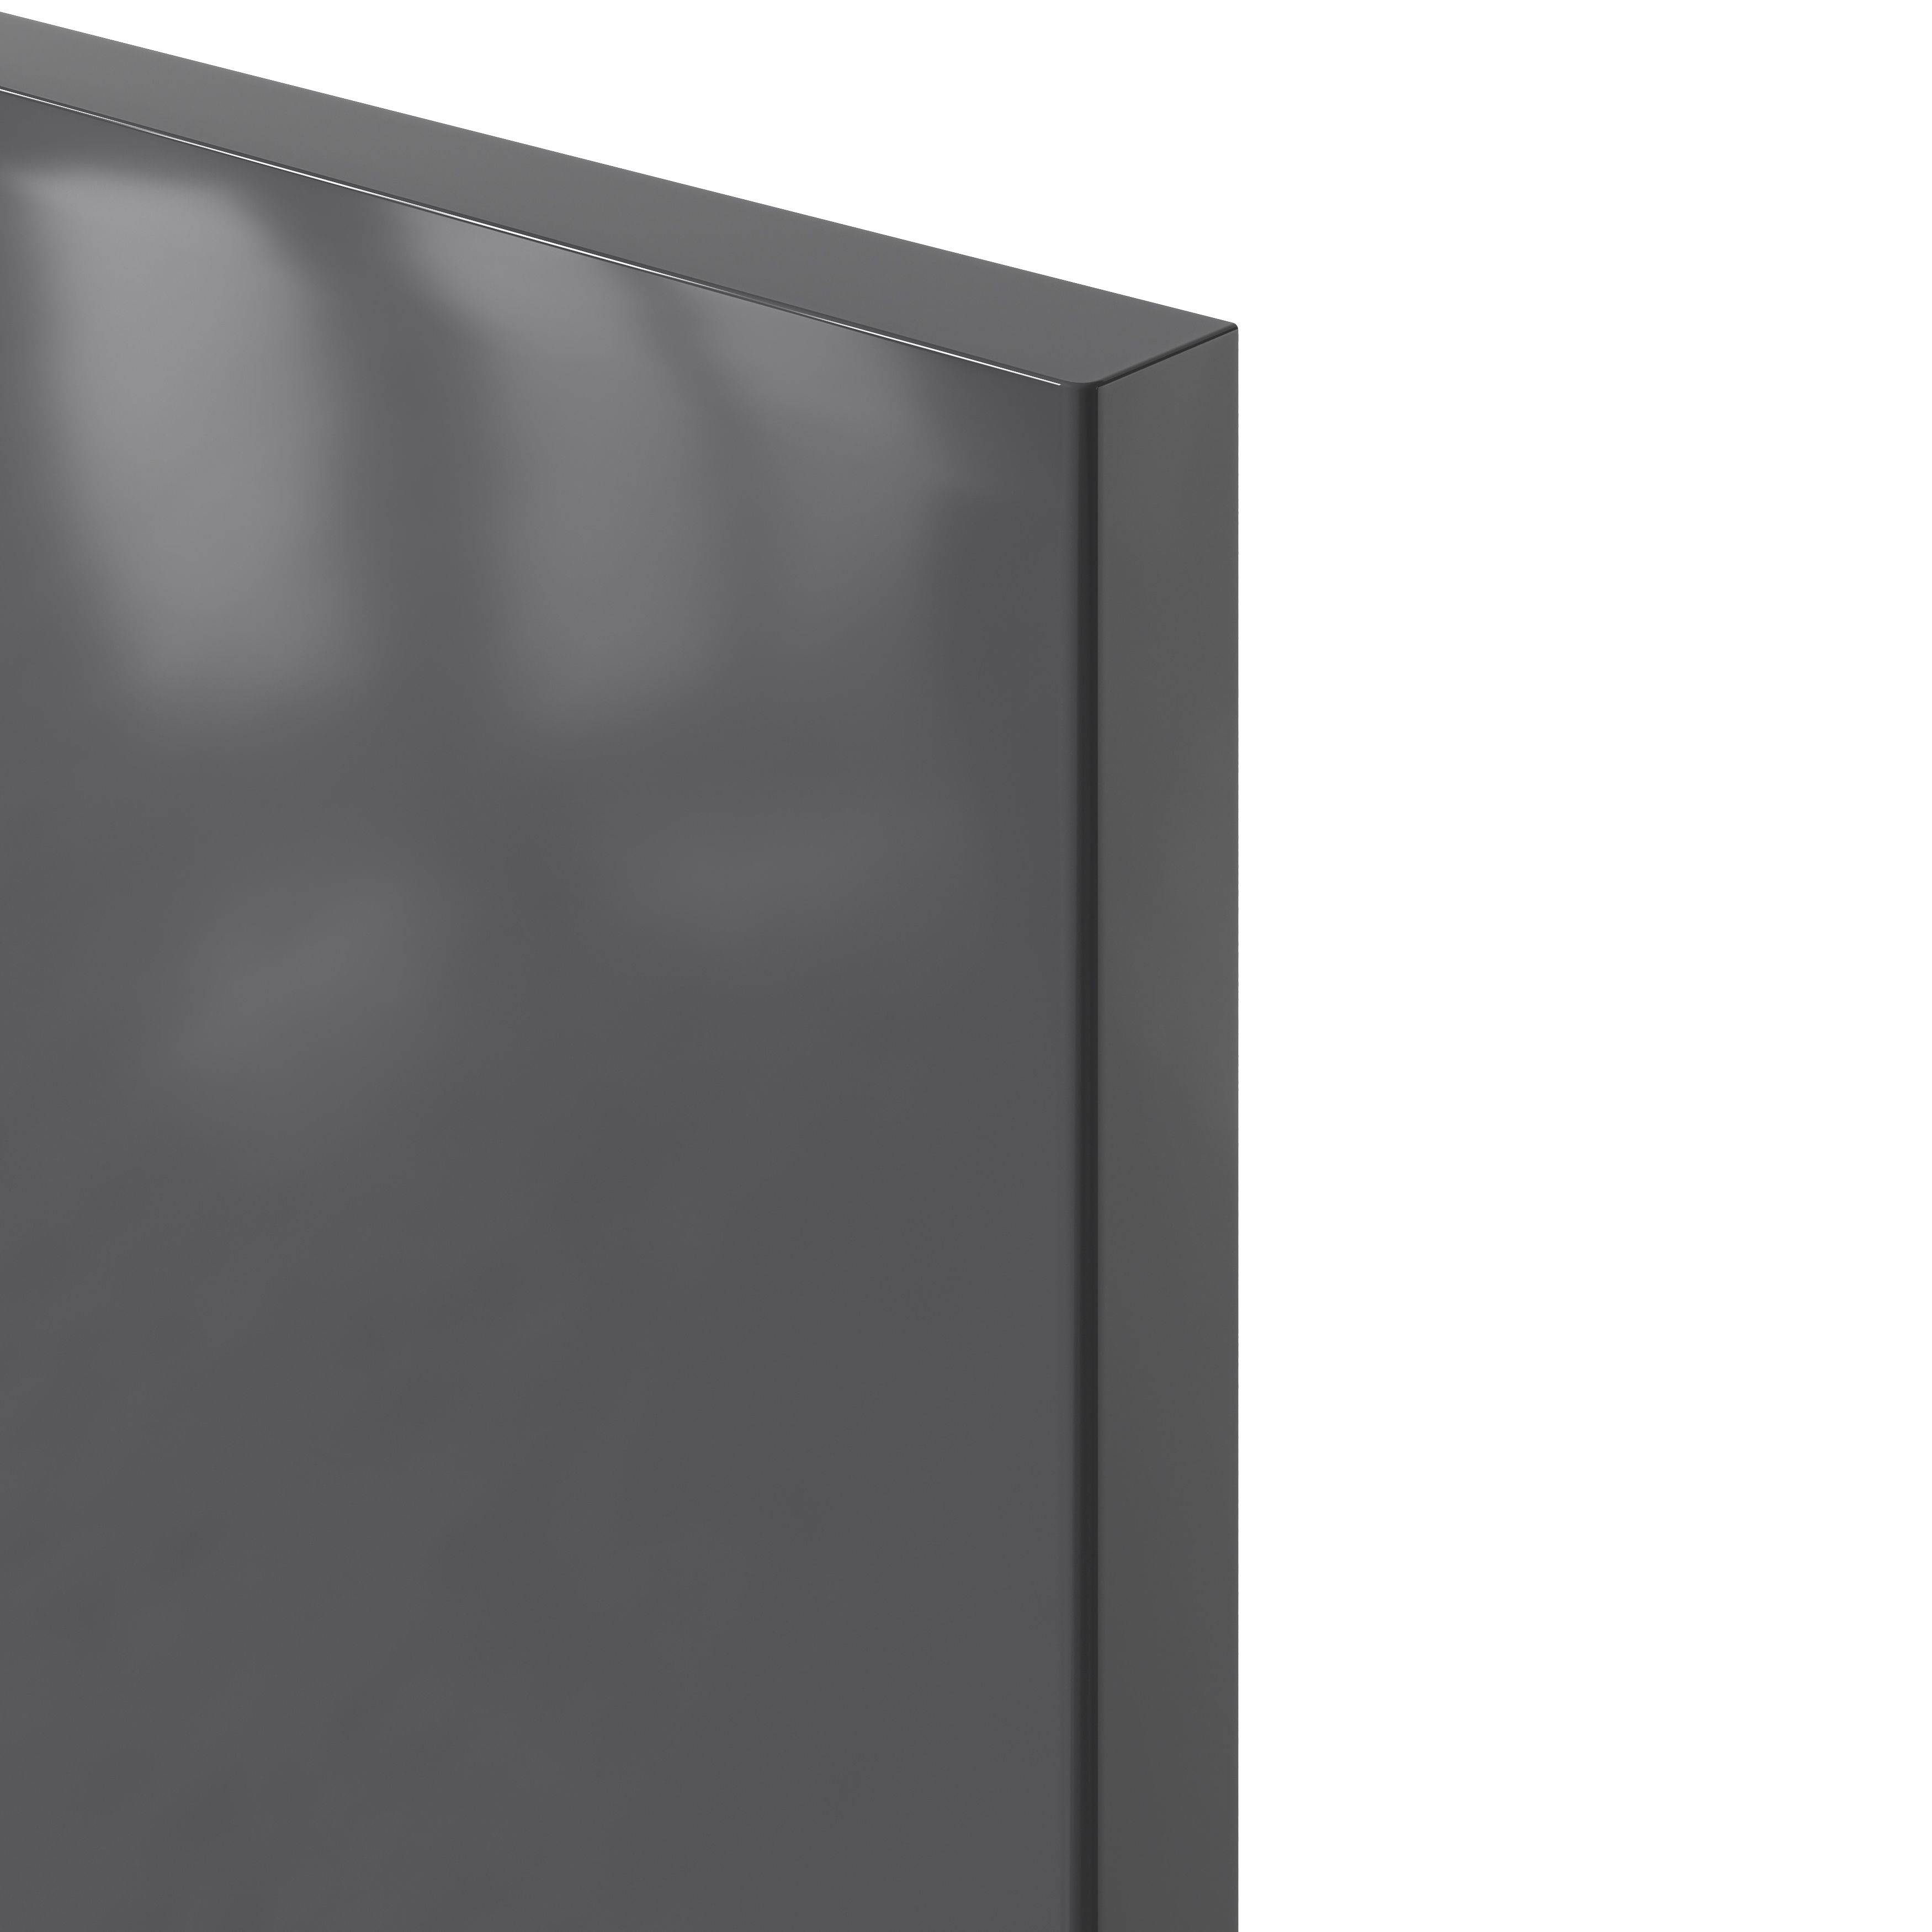 GoodHome Stevia Innovo handleless gloss anthracite slab Drawer front, bridging door & bi fold door, (W)400mm (H)340mm (T)18mm